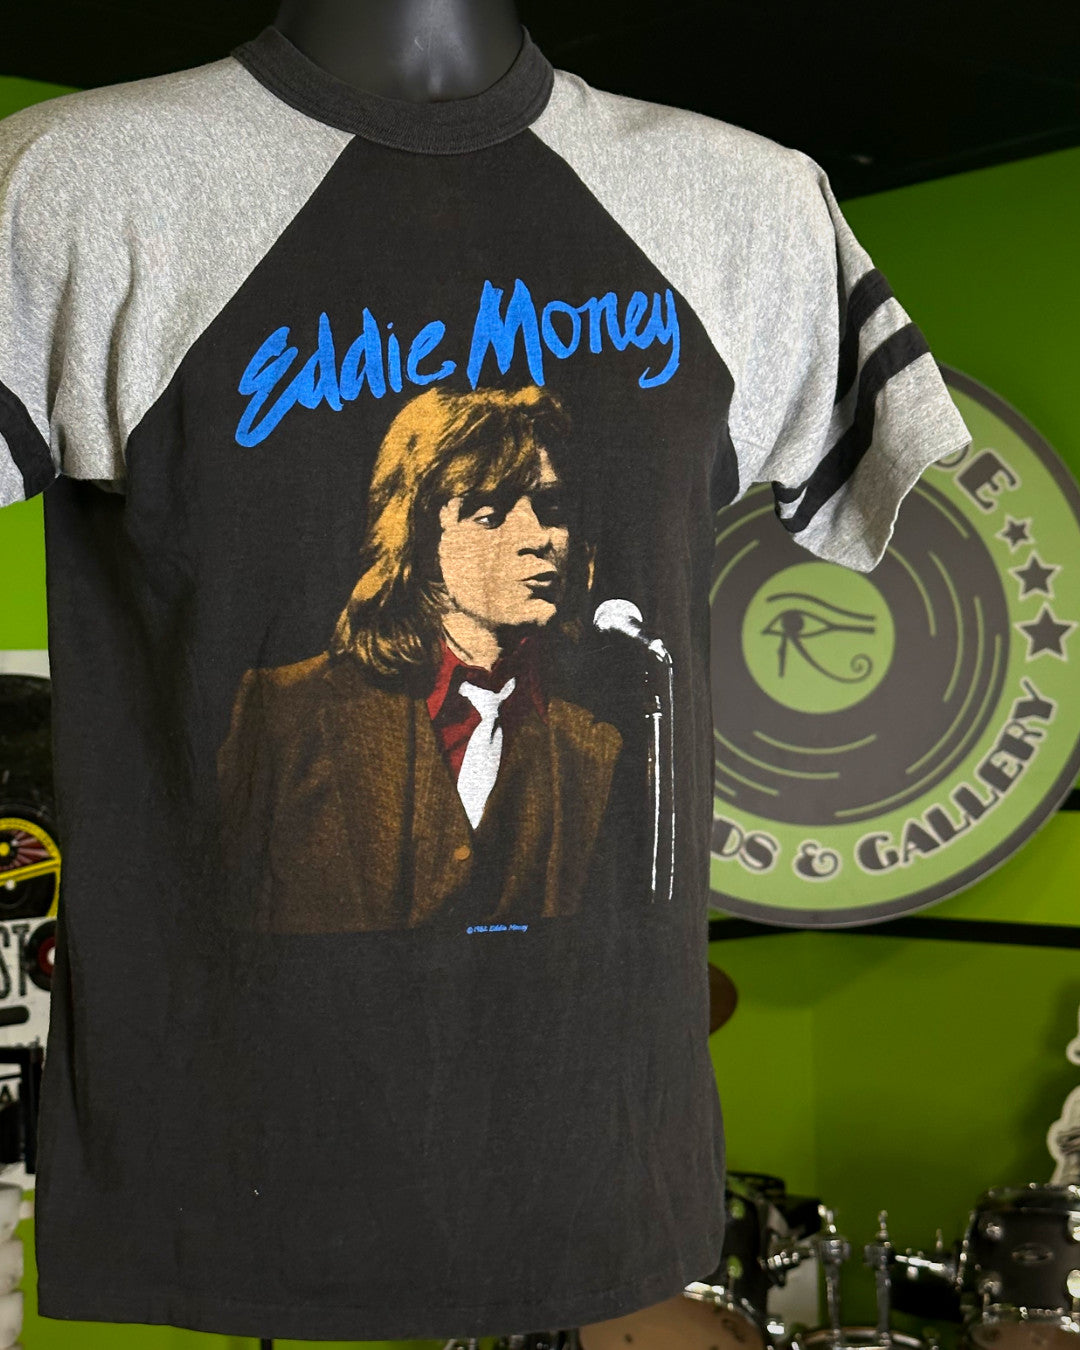 Eddie Money 1982 Shakin Texas Tour T-Shirt, Black w/Grey Arms & Black Stripes, S (Tagged Medium)(Measures 24.5” Long, 17.5” Pit To Pit) - Darkside Records